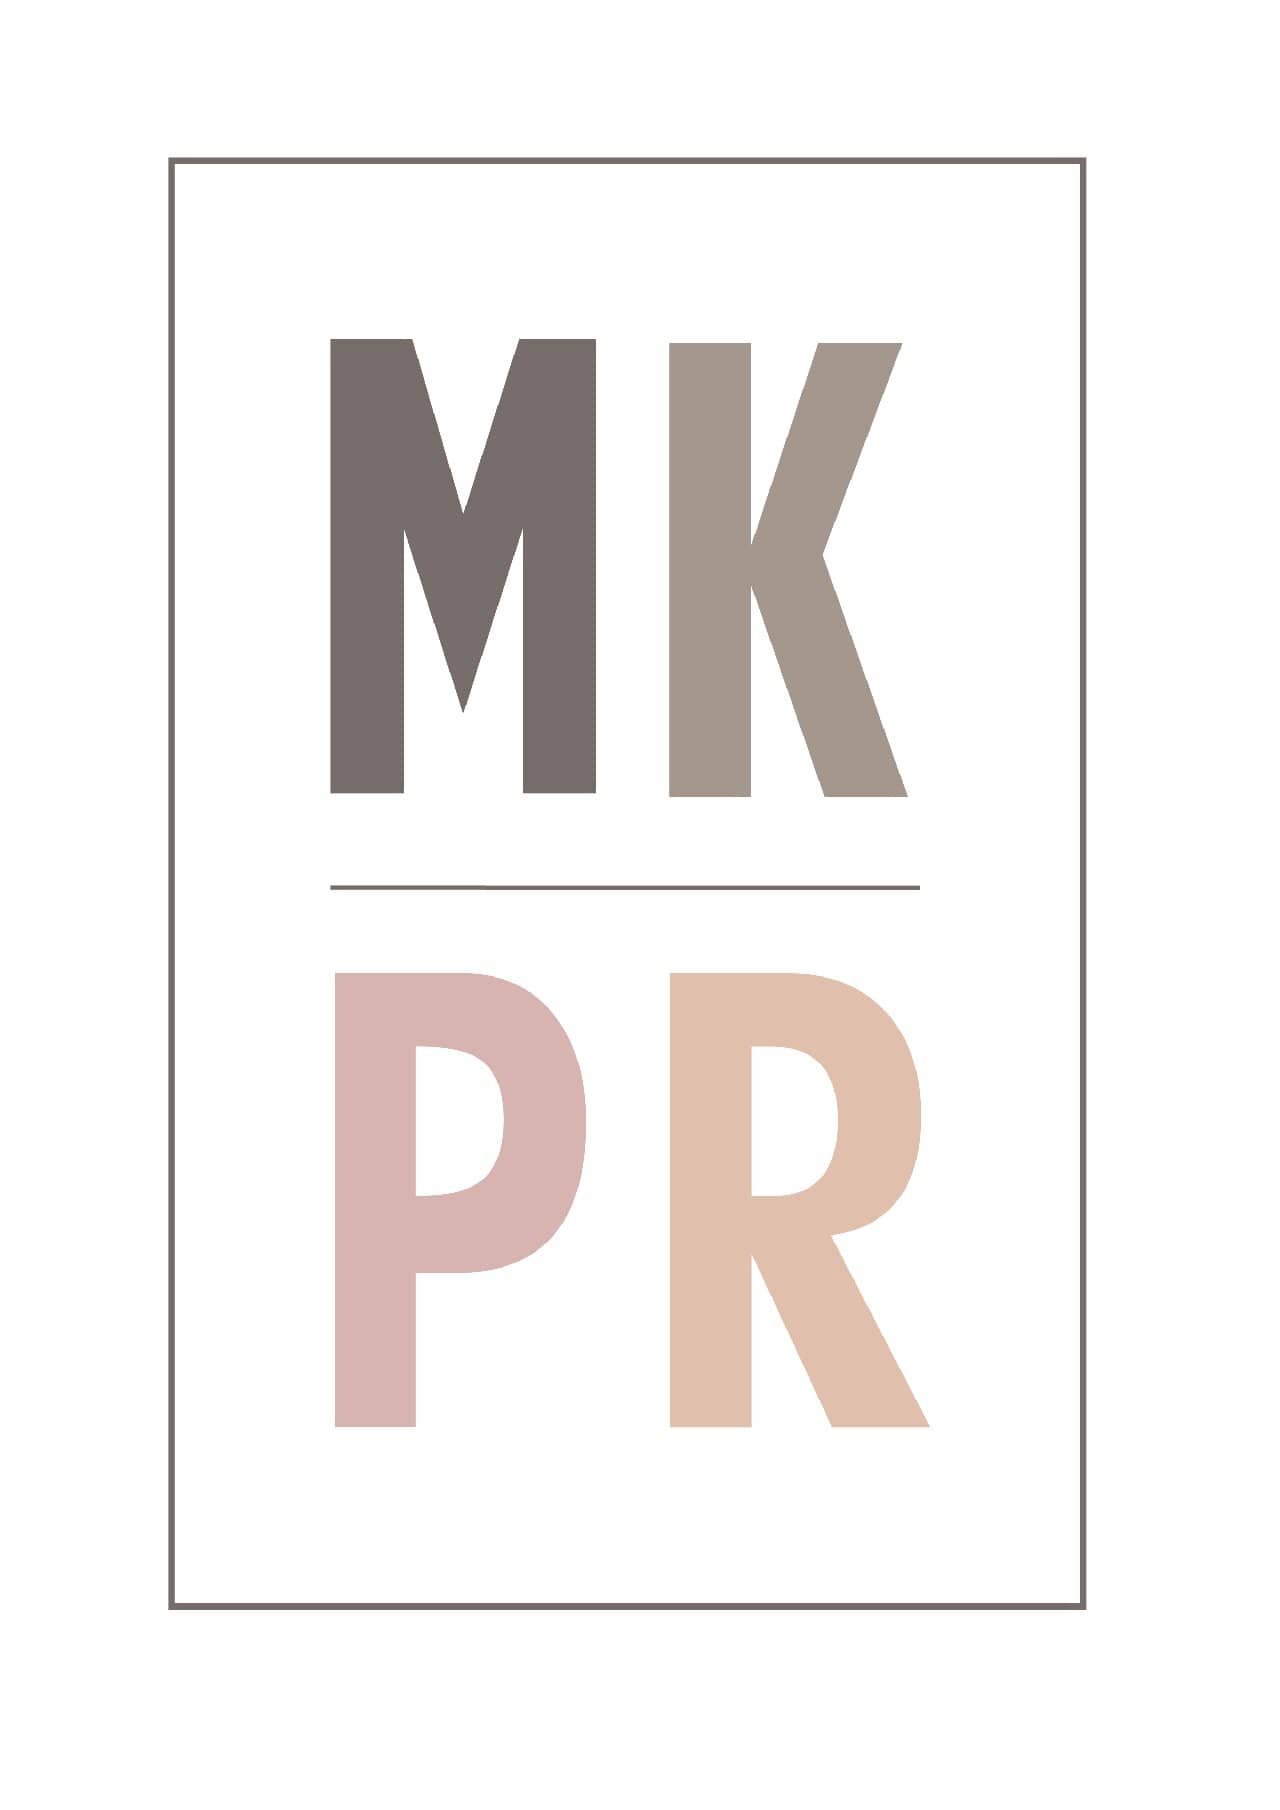 MK Public Relations